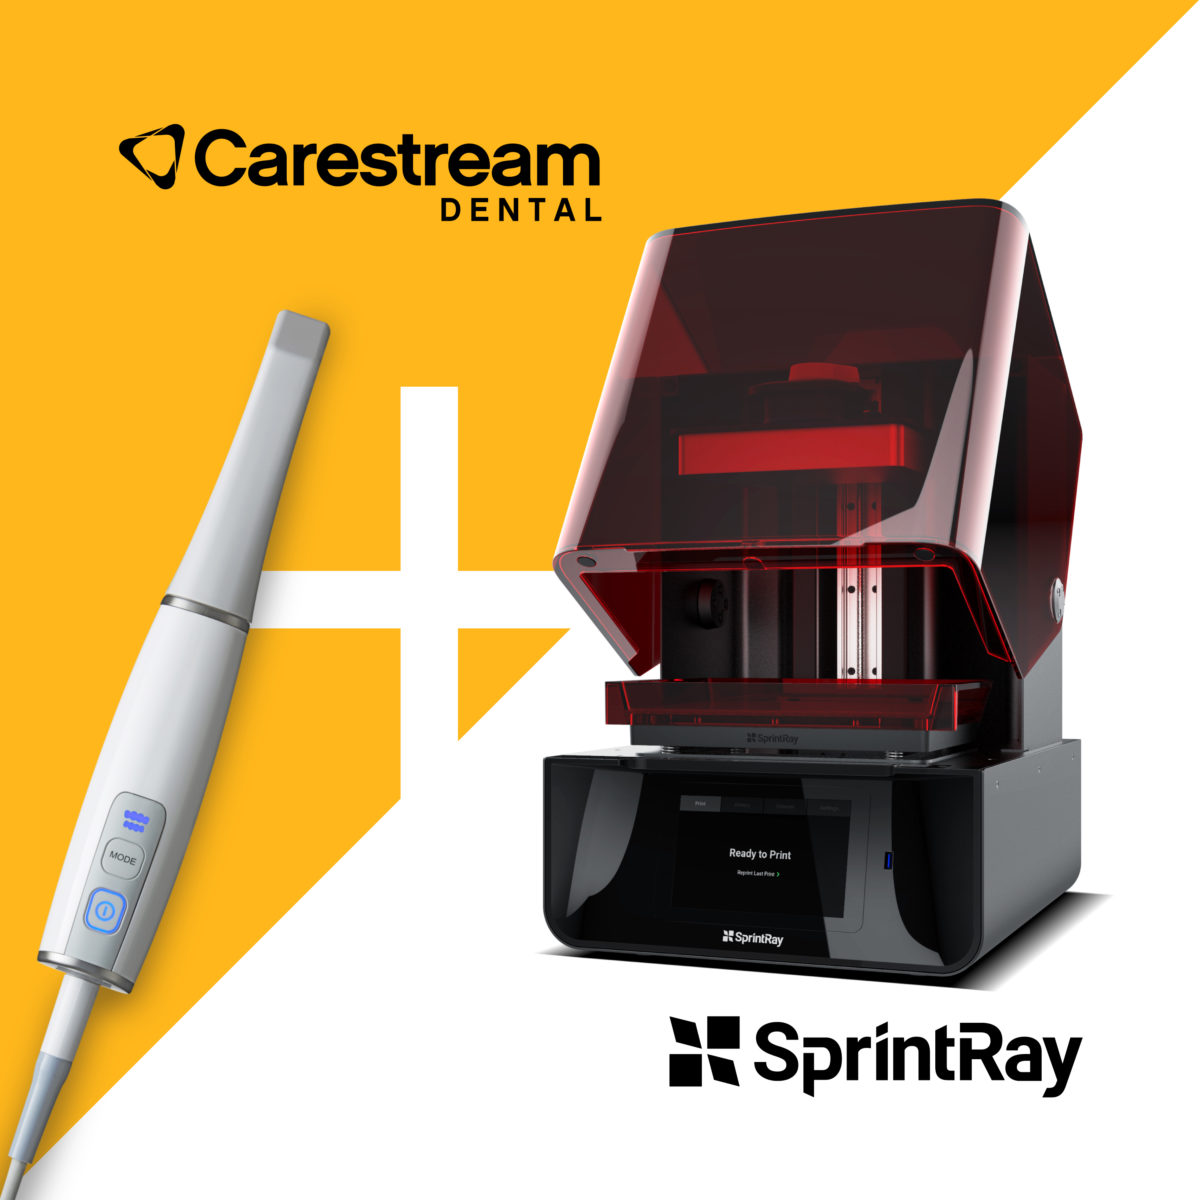 Carestream scanner and SprintRay printer